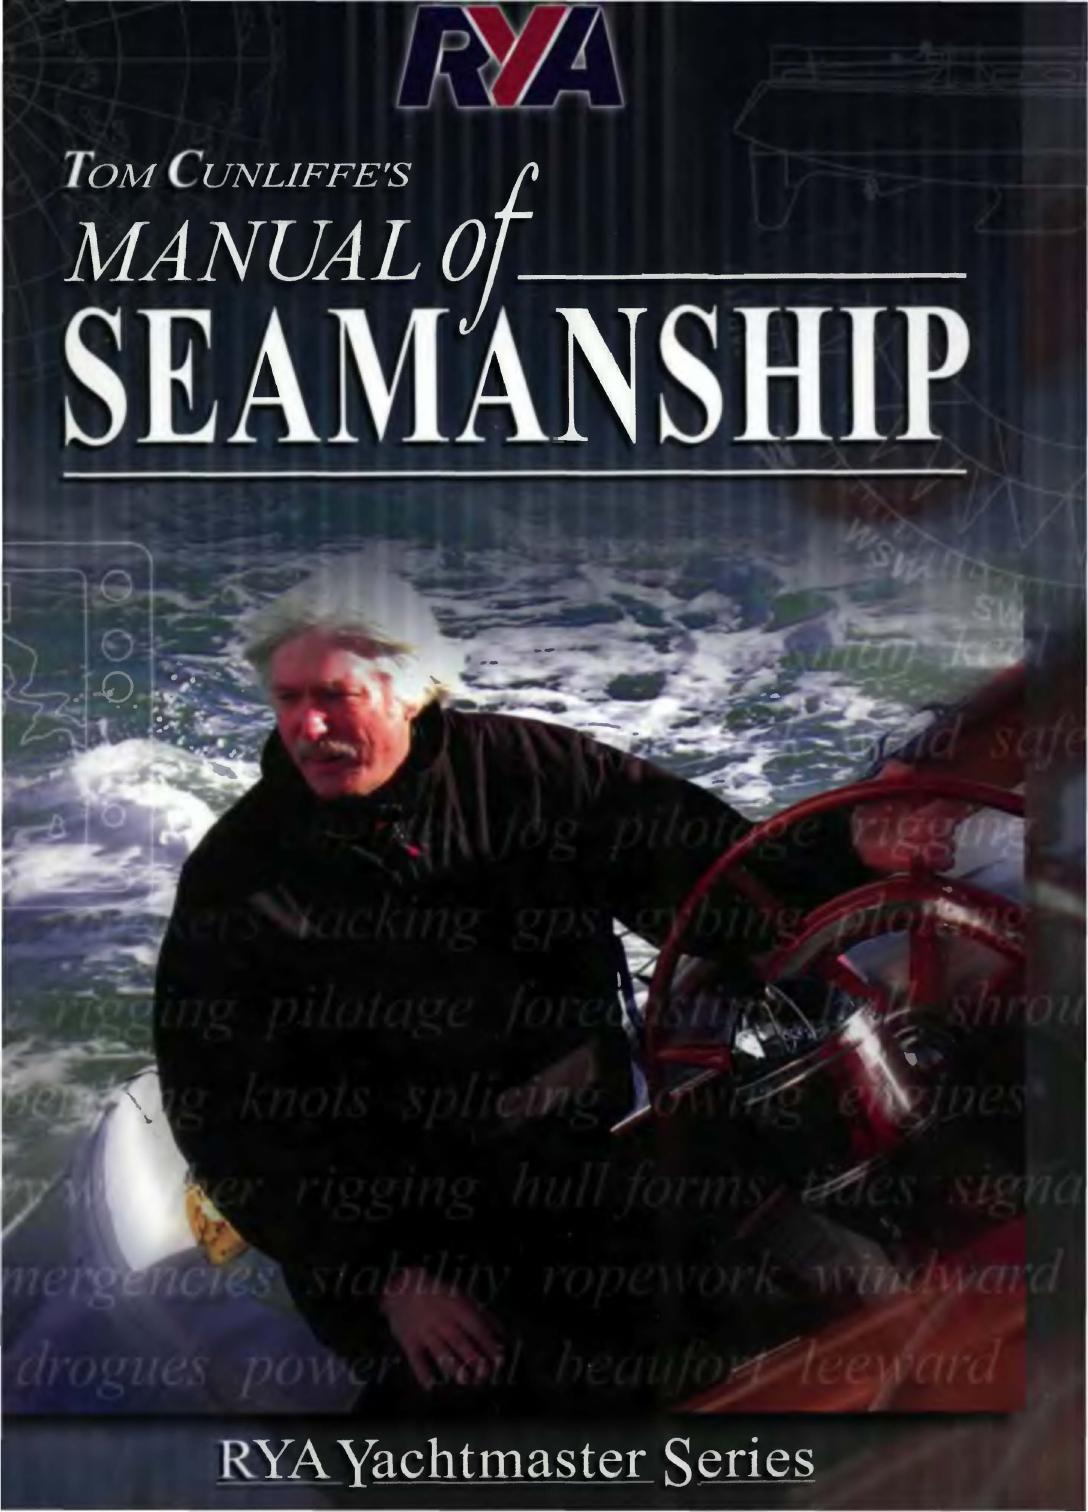 RYA Manual of Seamanship (G36) 2007 Cunliffe 1905104073